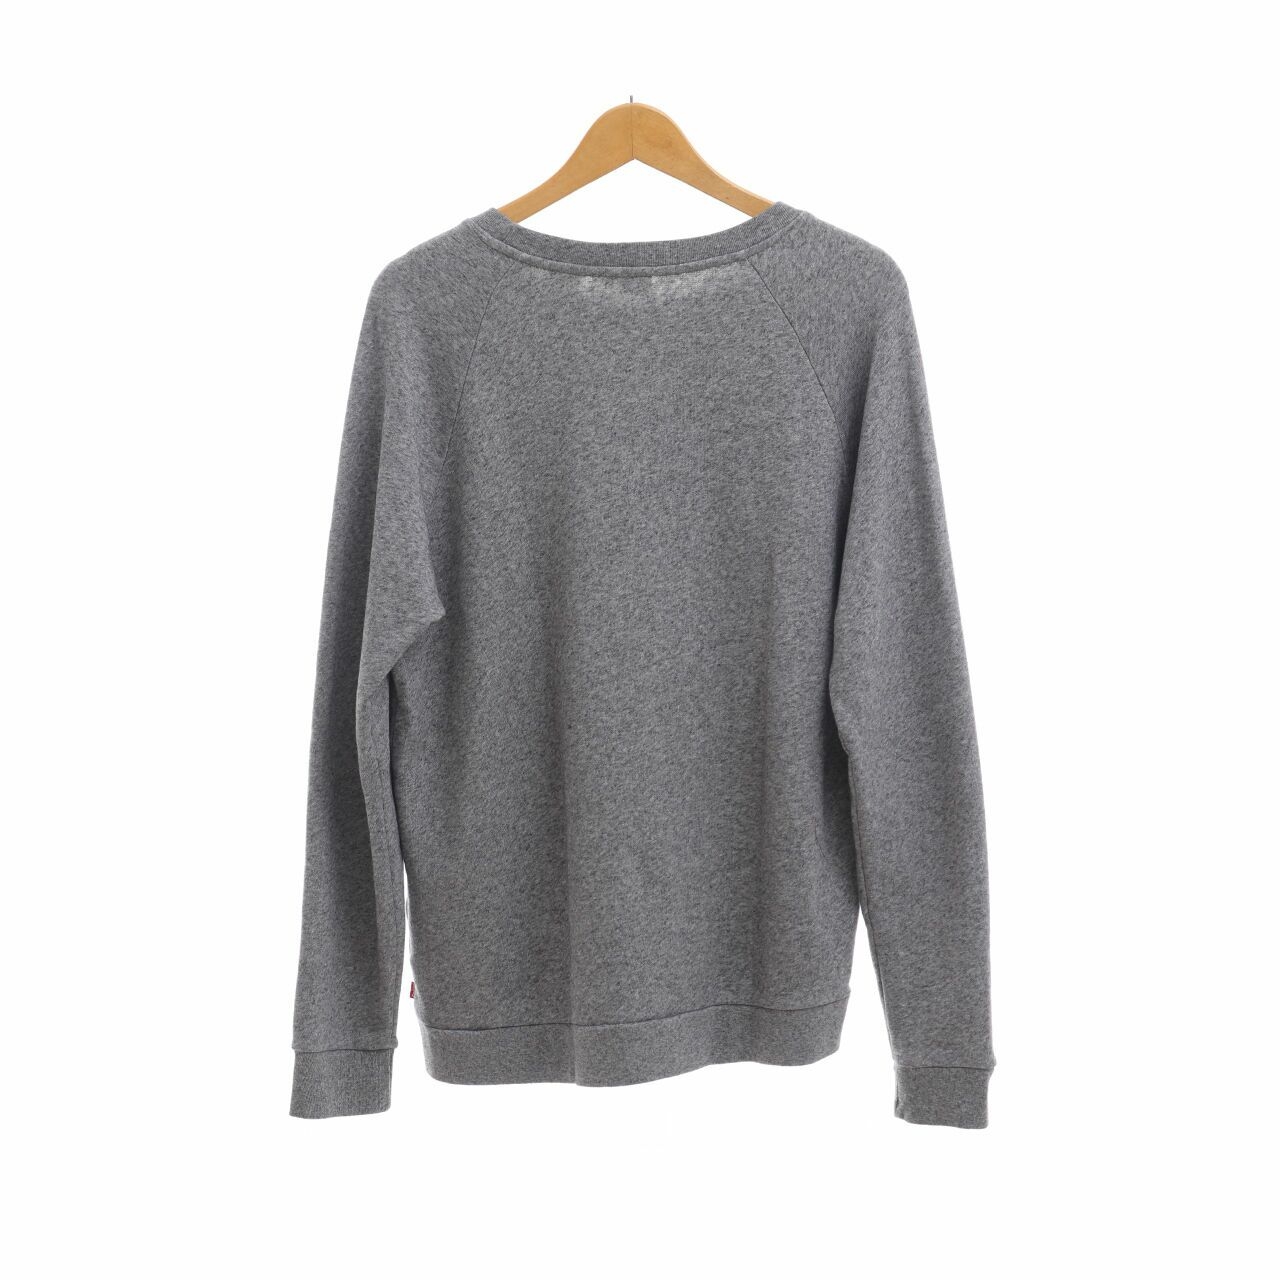 Levi's Grey Sweater